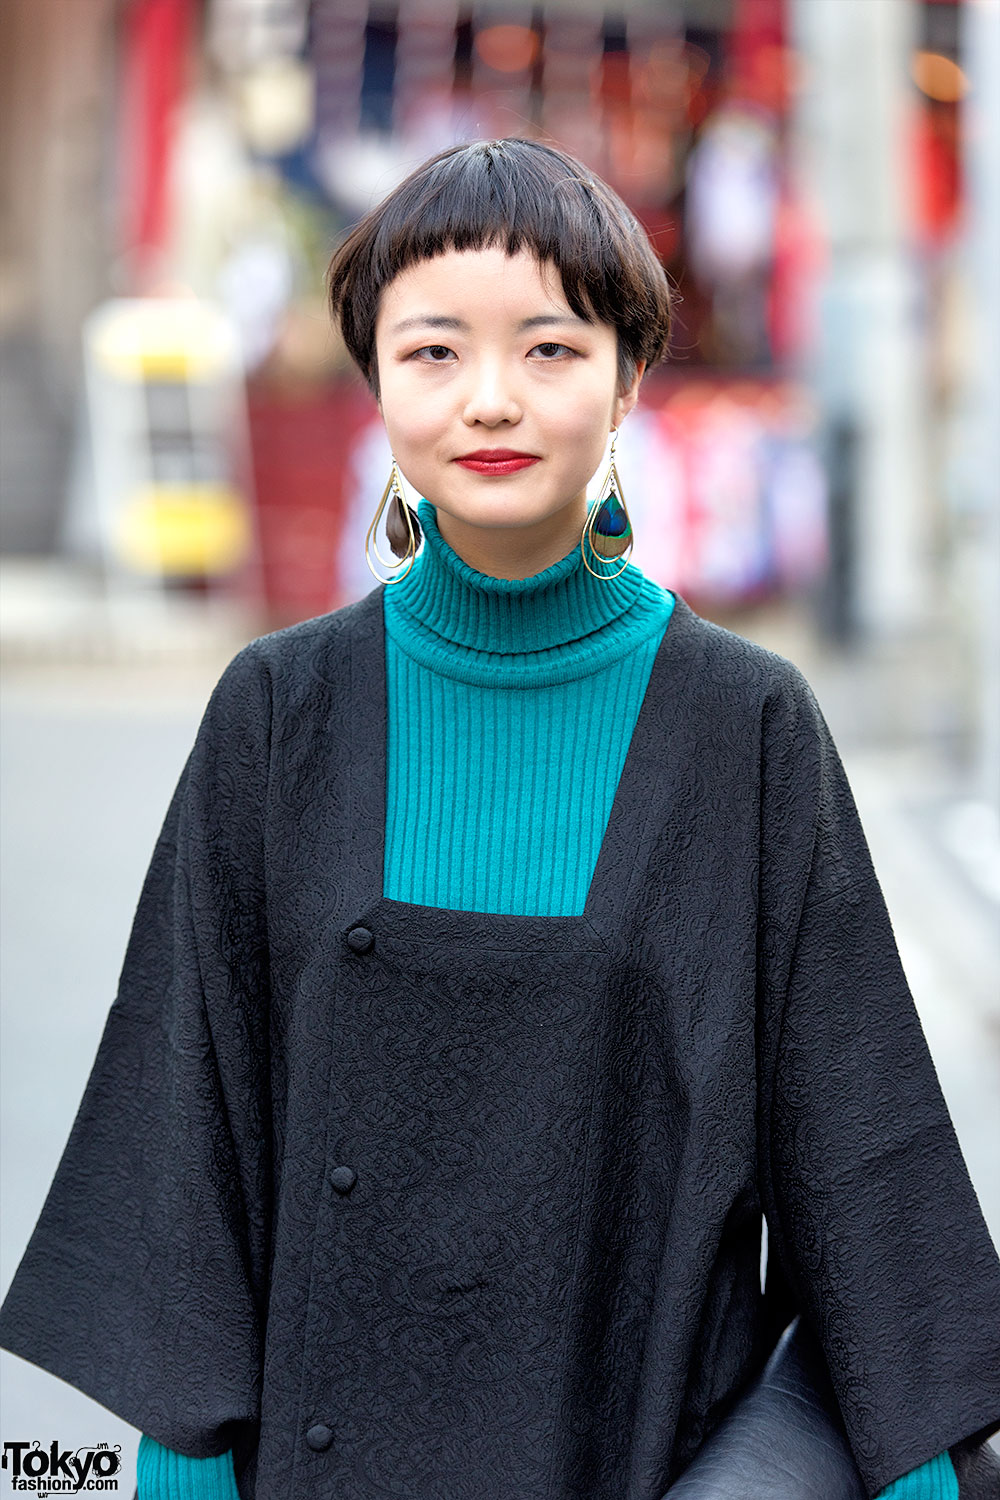 Harajuku Girl in Vintage Kimono Jacket, Geta Sandals & Short Hairstyle ...